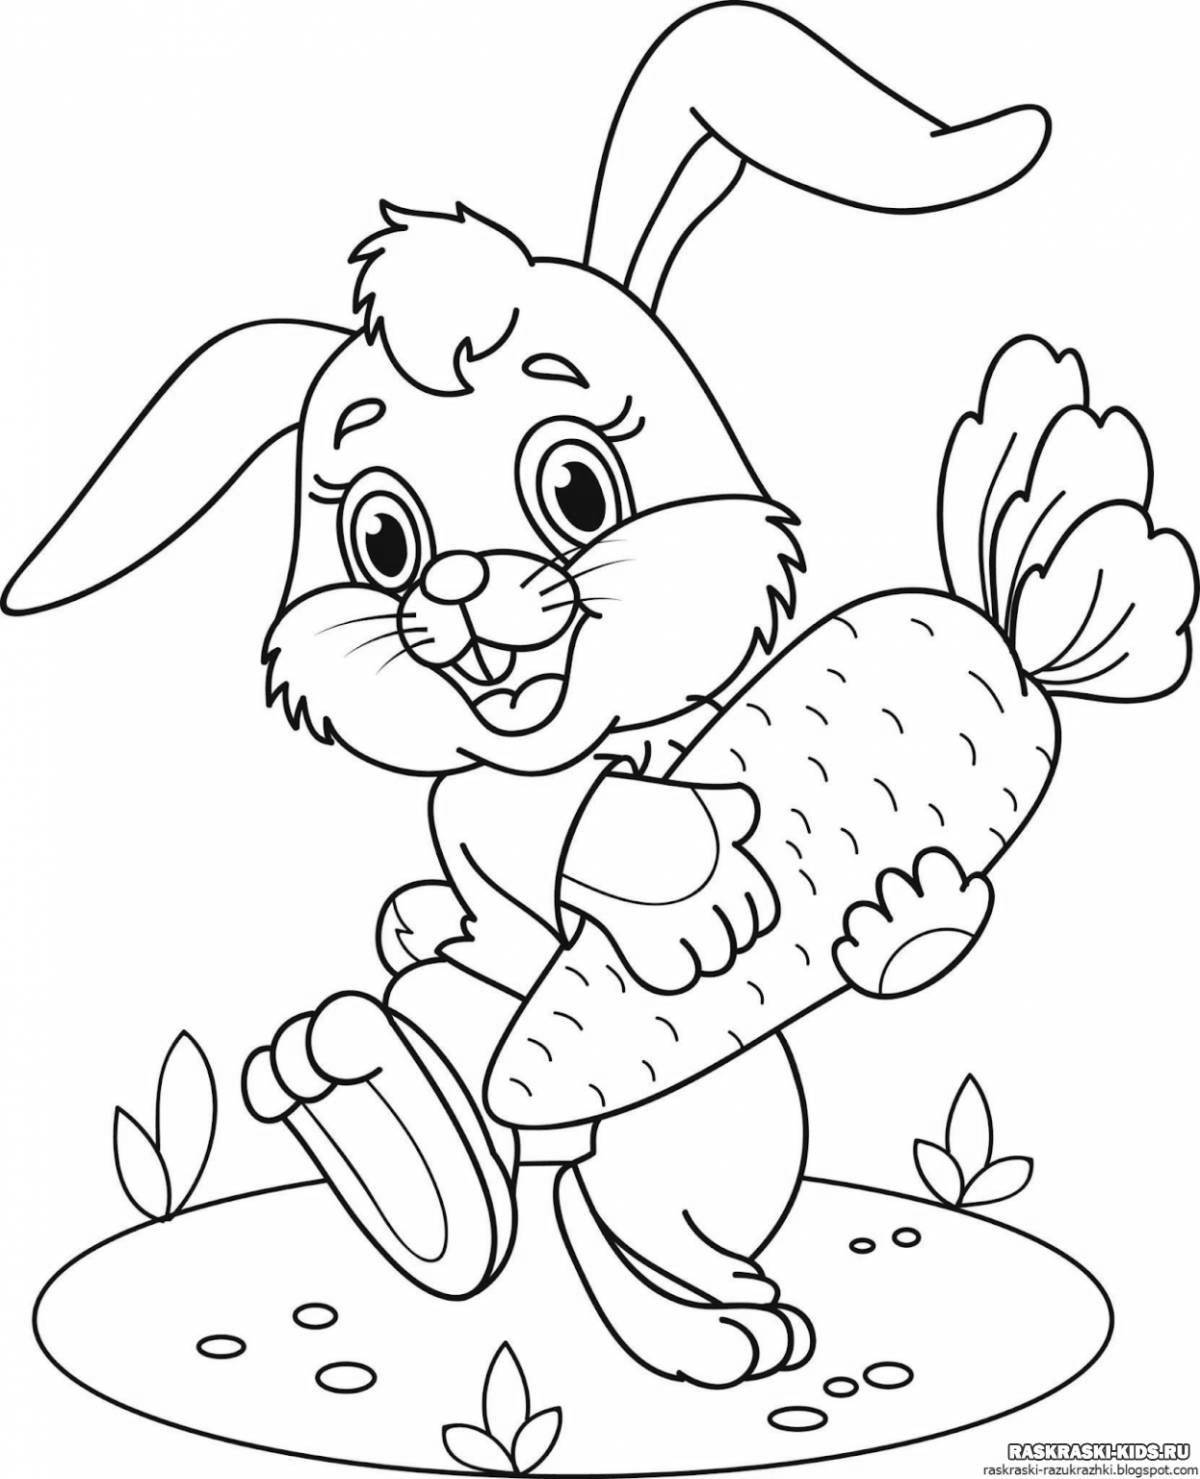 Interesting rabbit coloring book